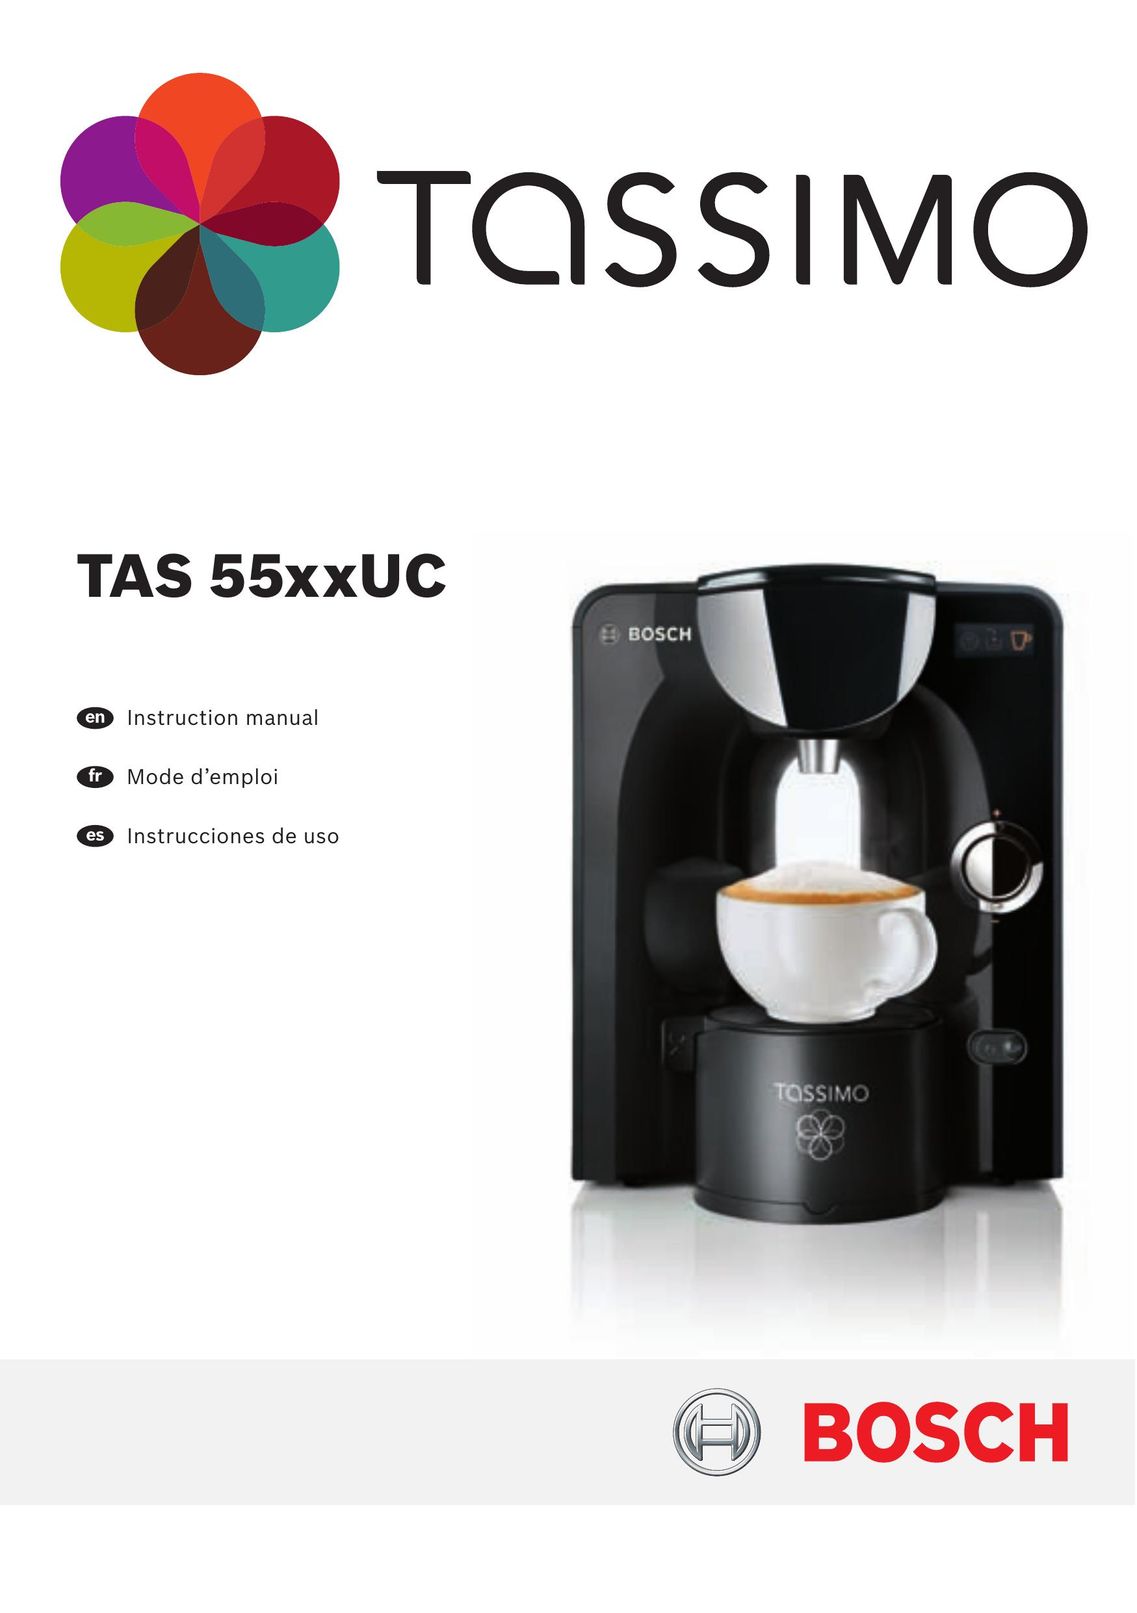 Bosch Appliances tas 55xxuc Coffeemaker User Manual